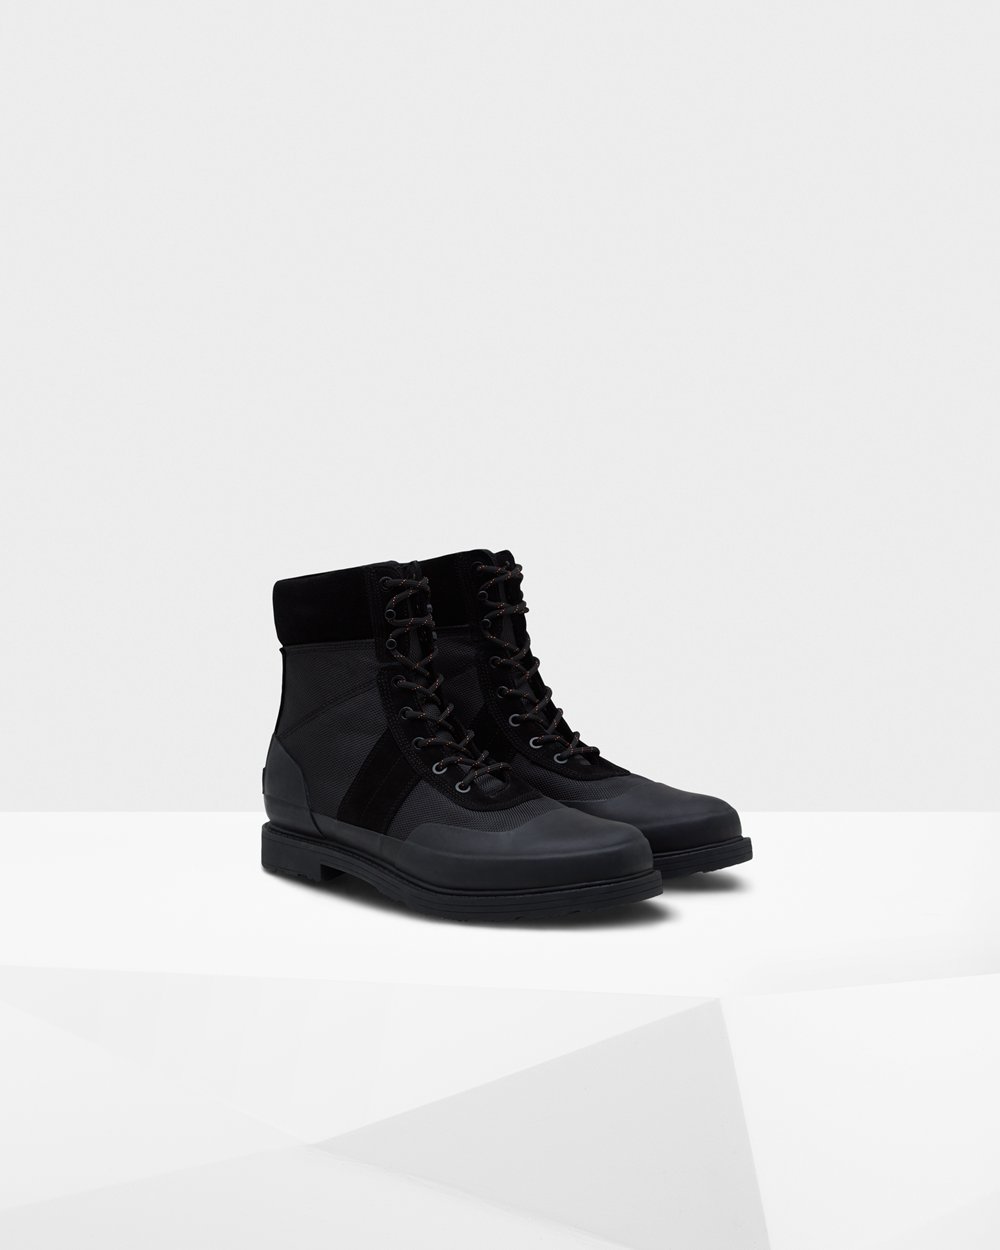 Mens Ankle Boots - Hunter Original Insulateds (75KUOBDIW) - Black